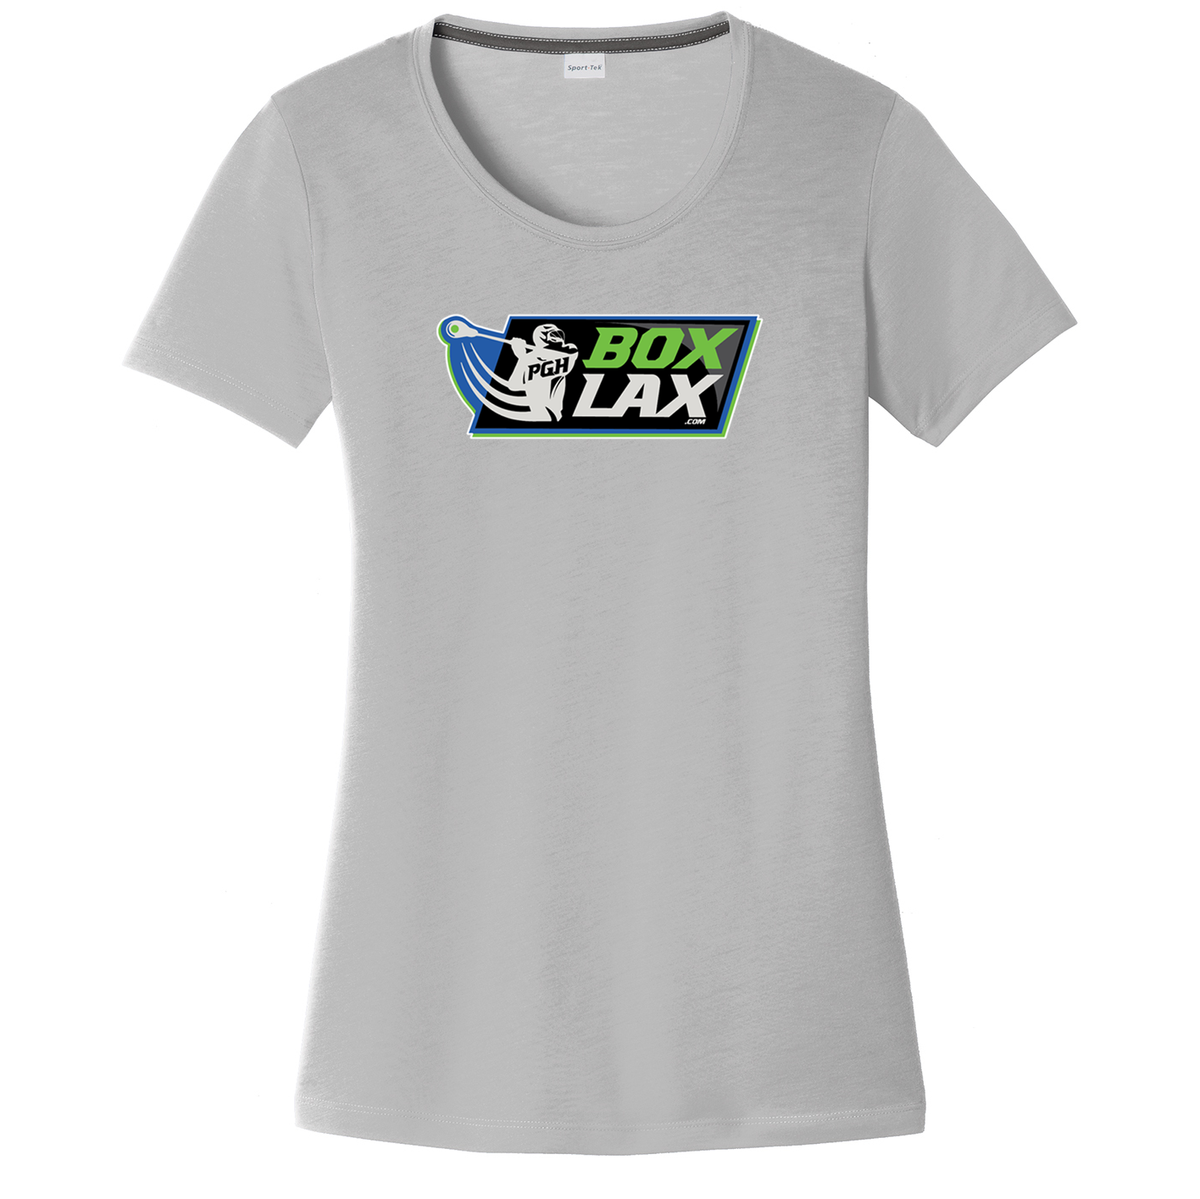 PSL Box Women's CottonTouch Performance T-Shirt